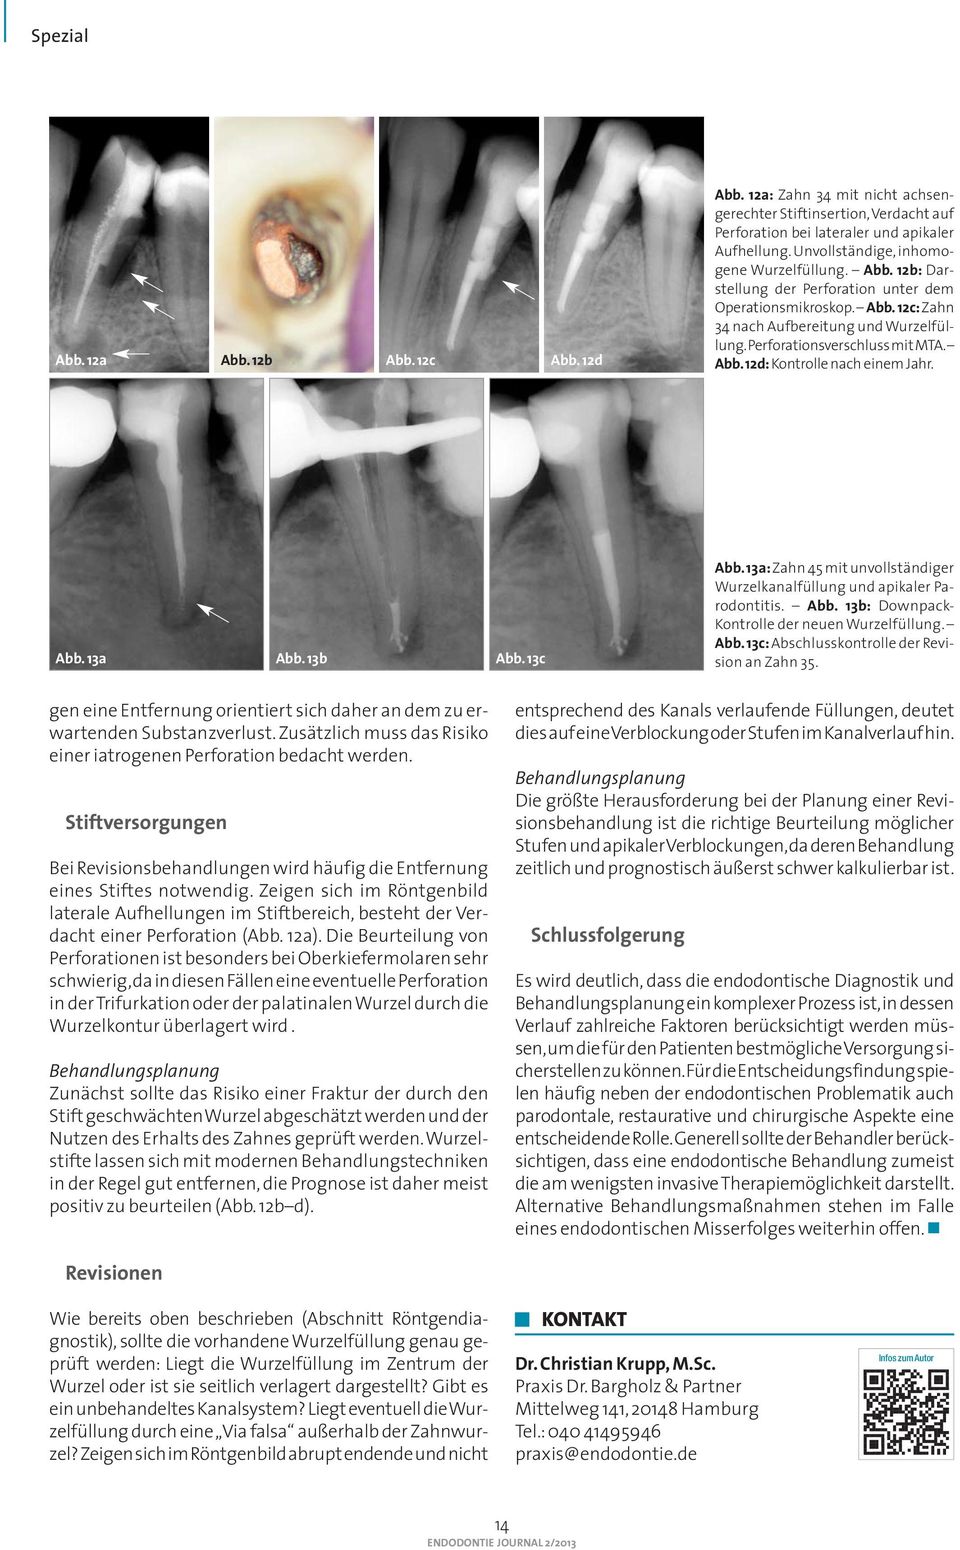 Abb. 12d: Kontrolle nach einem Jahr. Abb. 13a Abb. 13b Abb. 13c Abb. 13a: Zahn 45 mit unvollständiger Wurzelkanalfüllung und apikaler Parodontitis. Abb. 13b: Downpack- Kontrolle der neuen Wurzelfüllung.